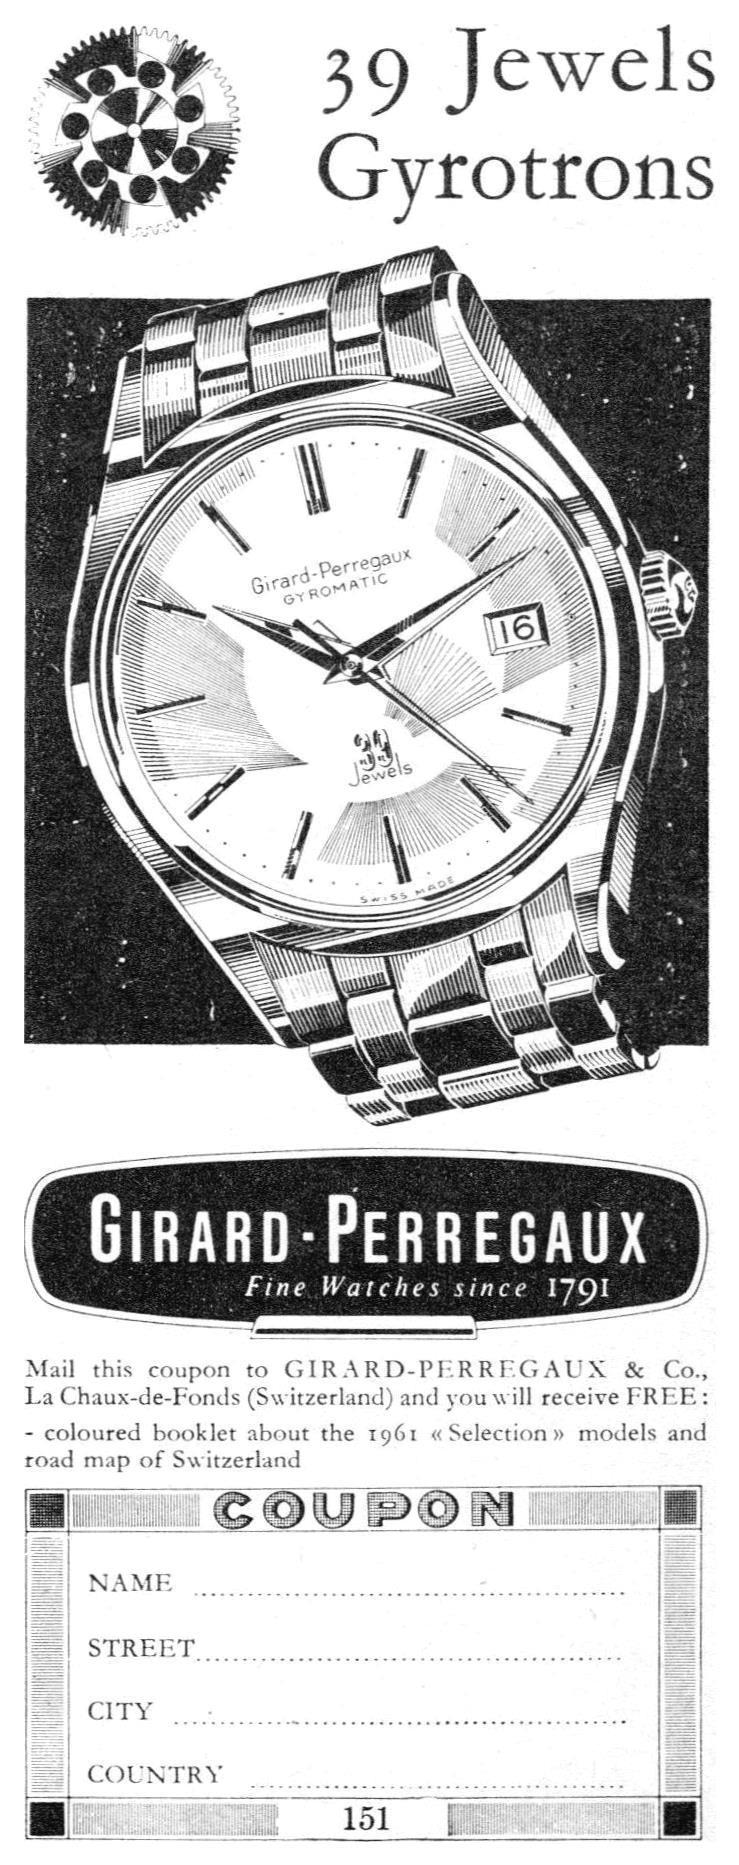 Girard-Perregaux 1961 0.jpg